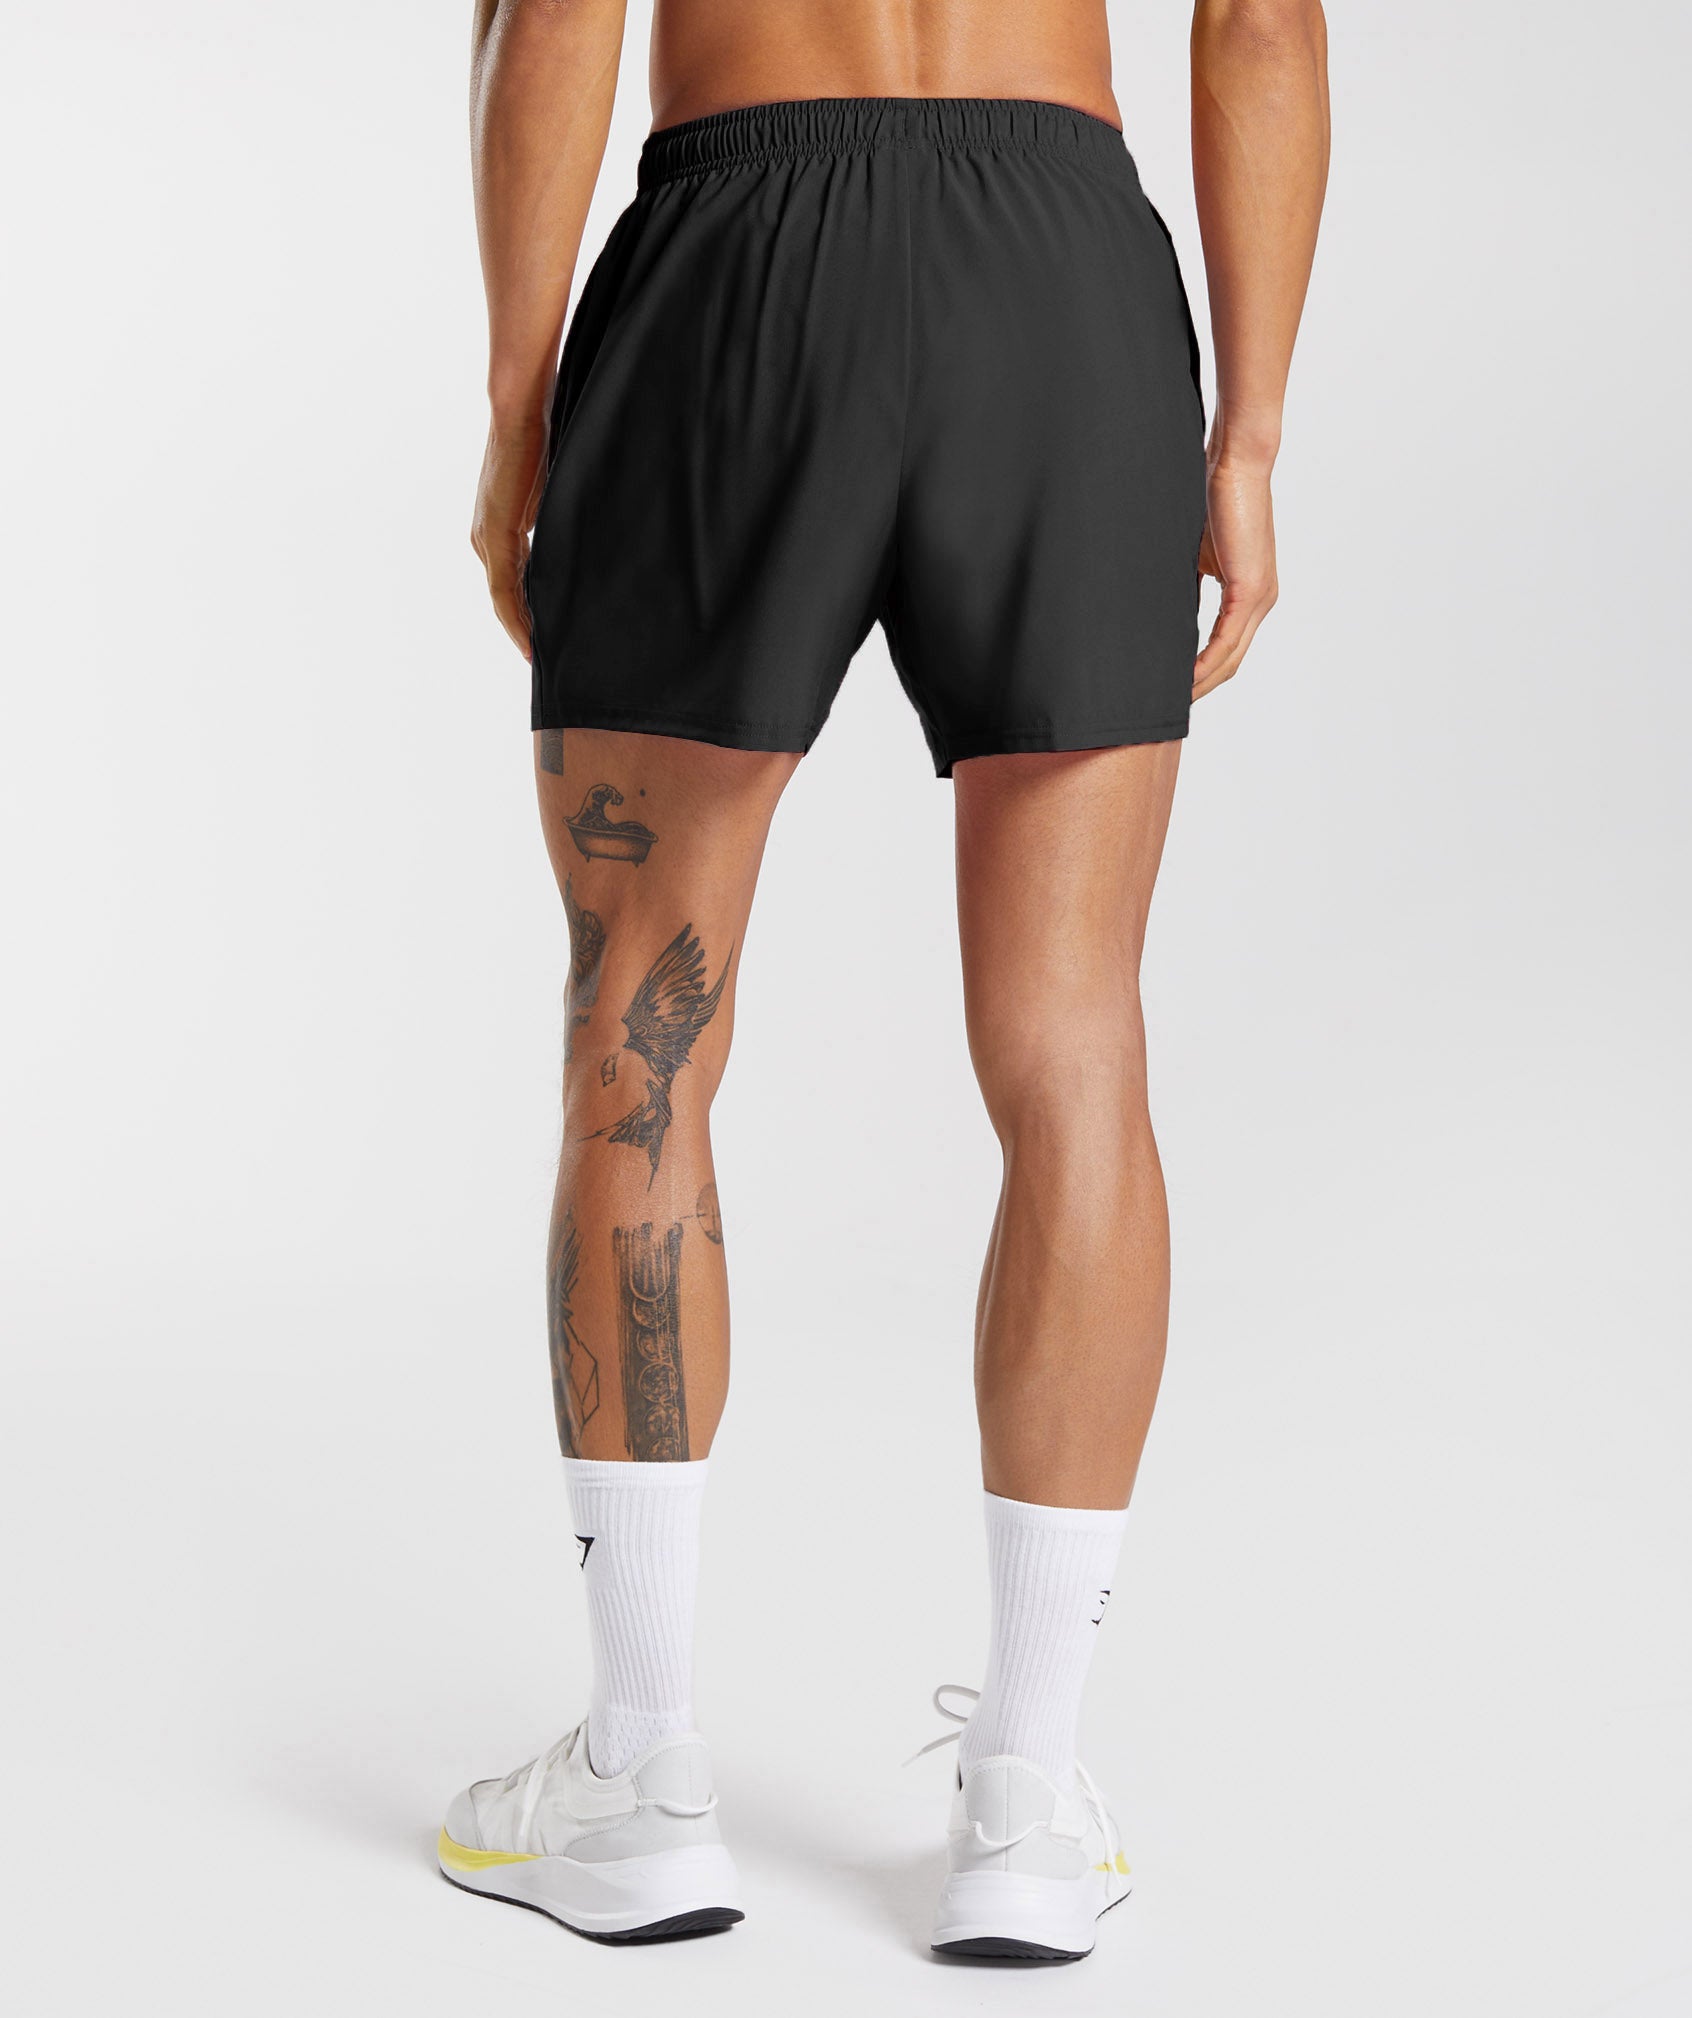 MIER Men's Workout Cotton Shorts 11'' Athletic Knit Shorts